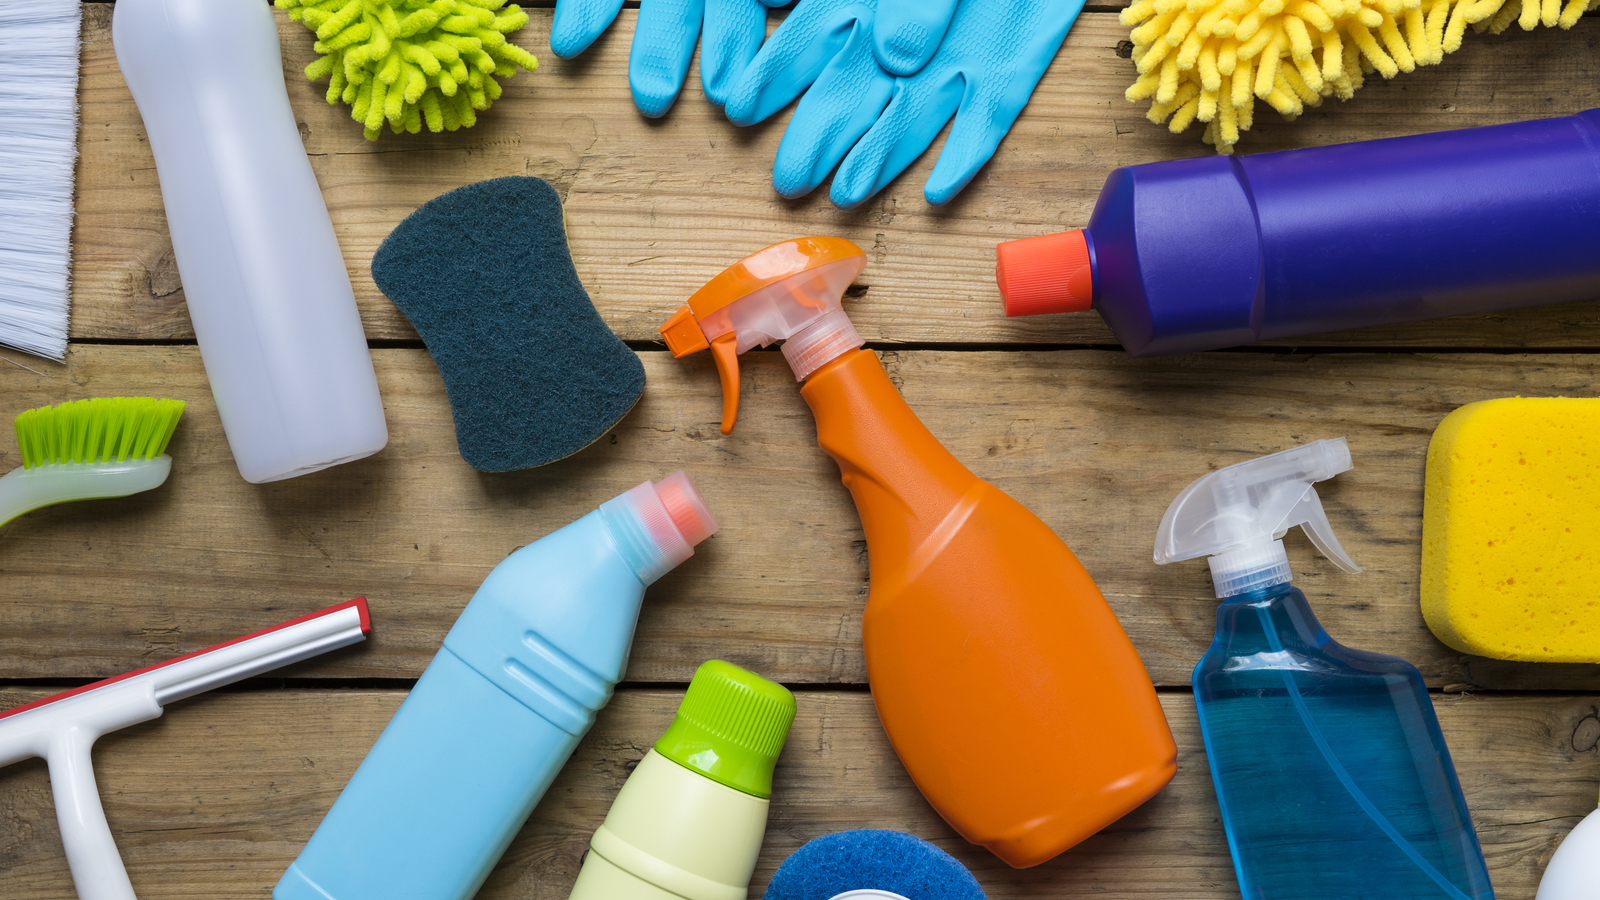 https://www.yardbarker.com/media/d/b/db5d5cbd9d857e806695c6d183cbb5bea947cde1/thumb_16x9/20-essential-dos-donts-diy-cleaning-products.jpg